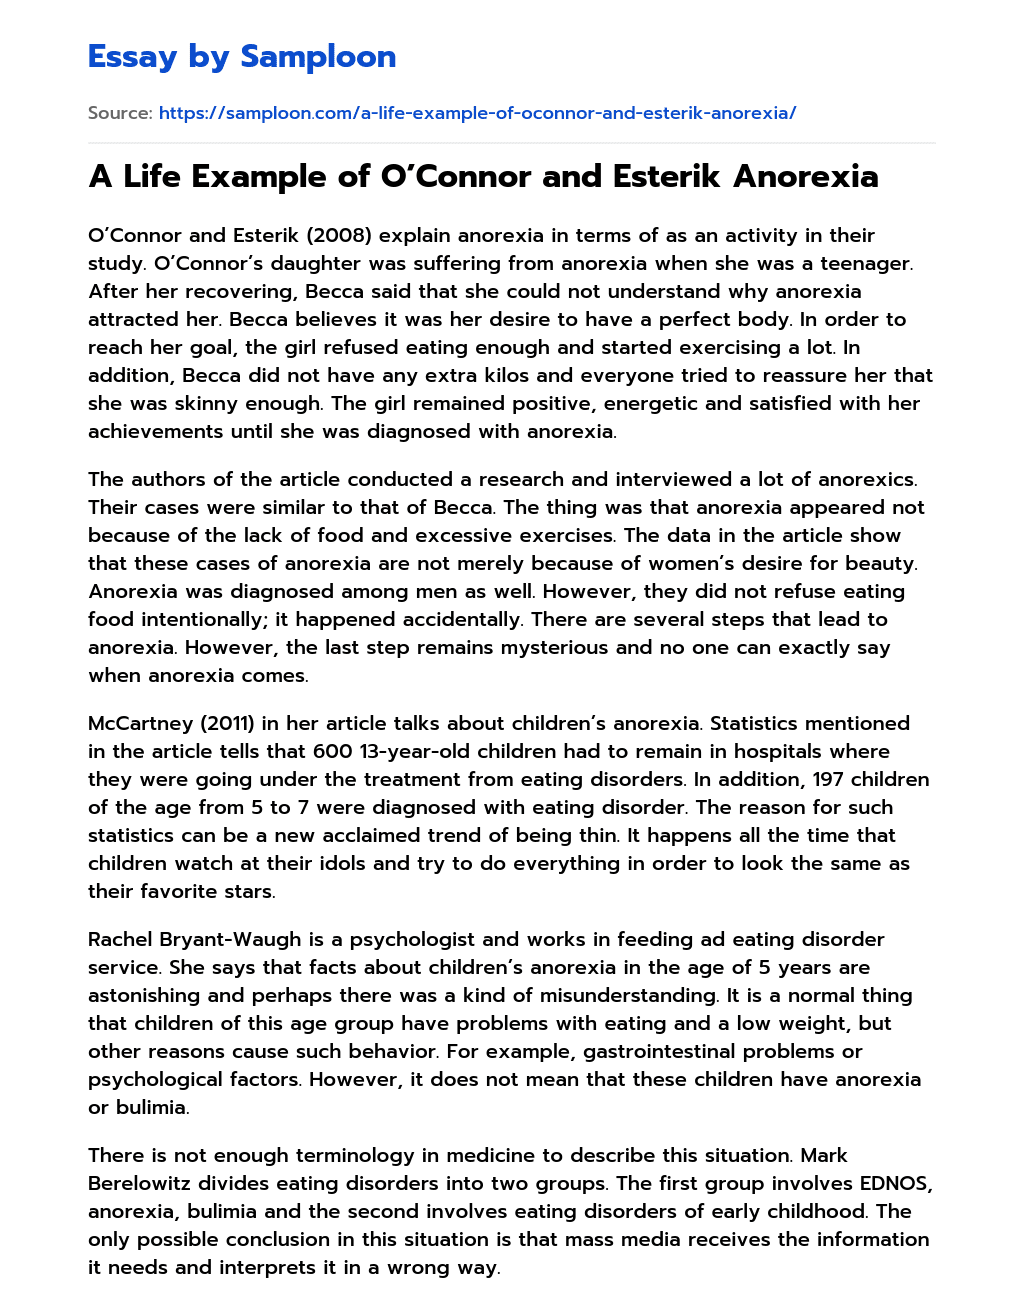 A Life Example of O’Connor and Esterik Anorexia essay